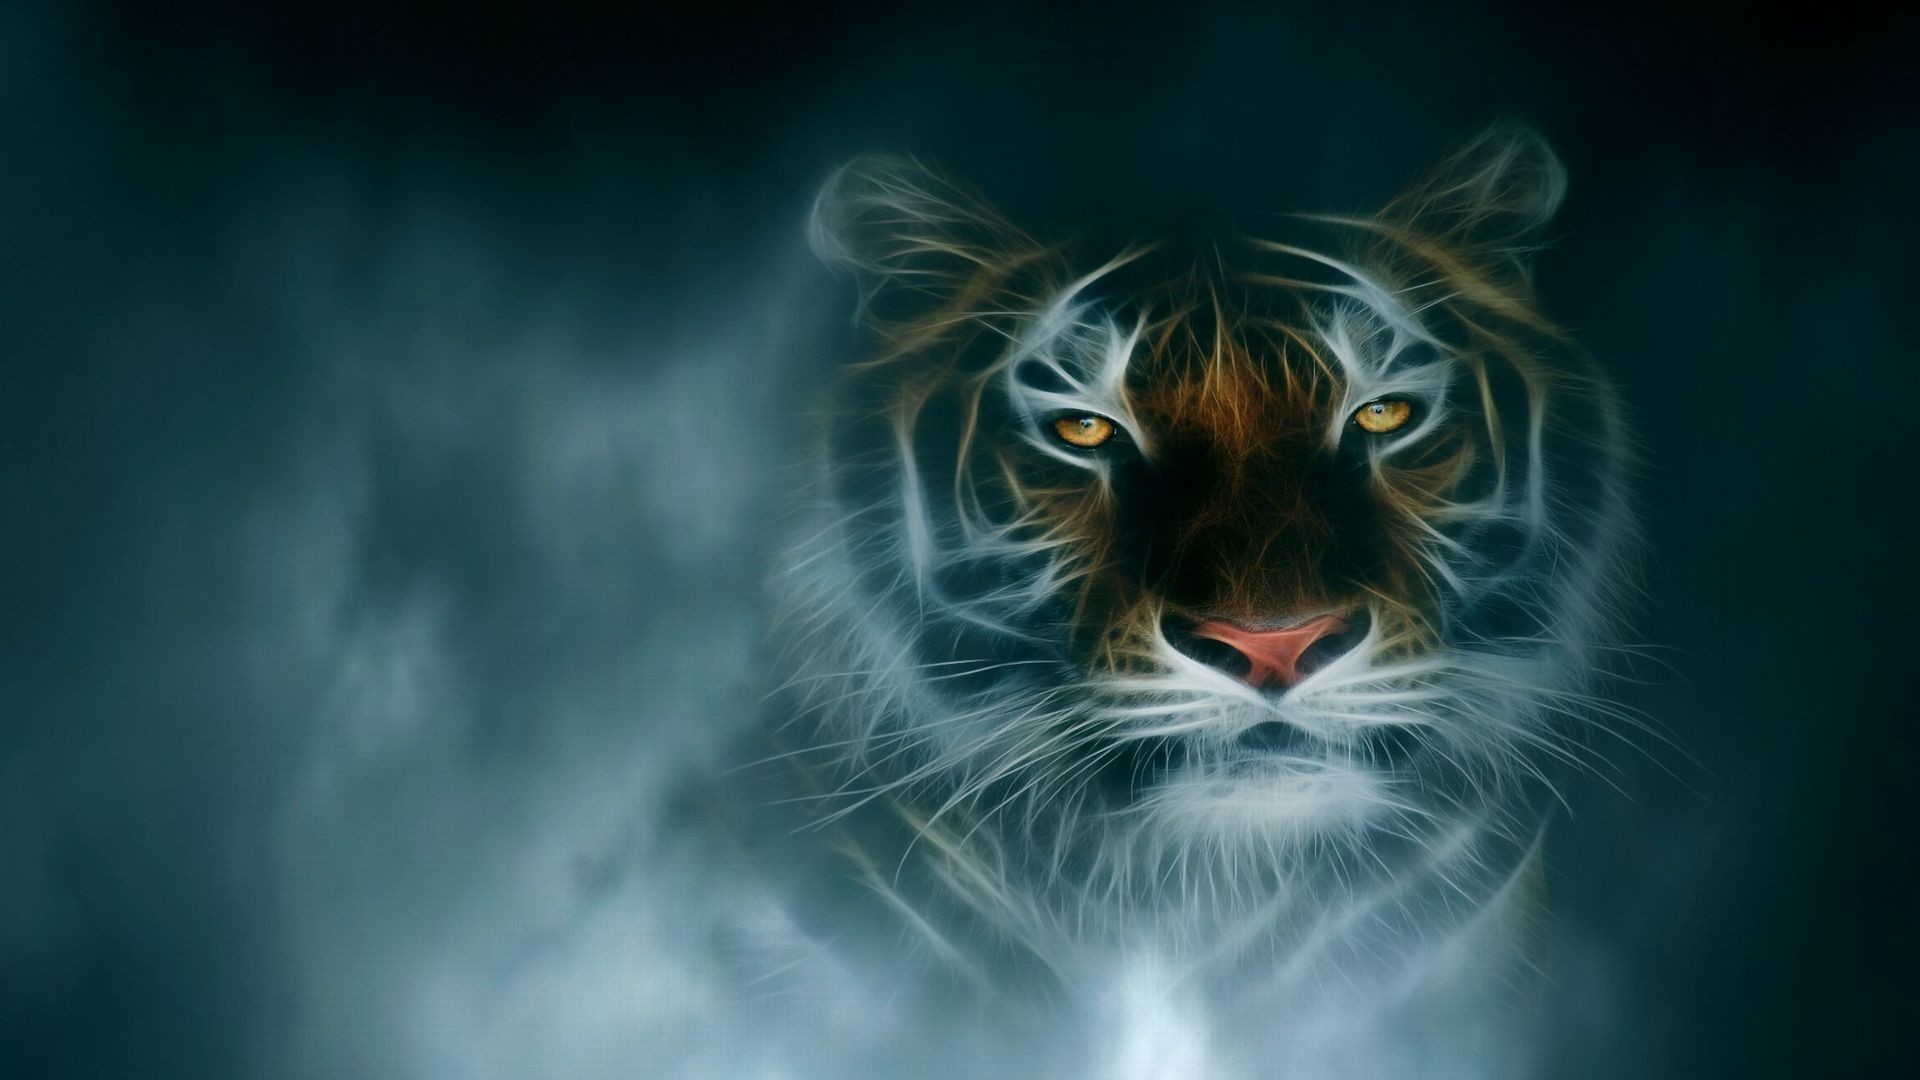 1920x1080 Fantasy Tiger Wallpaper HD